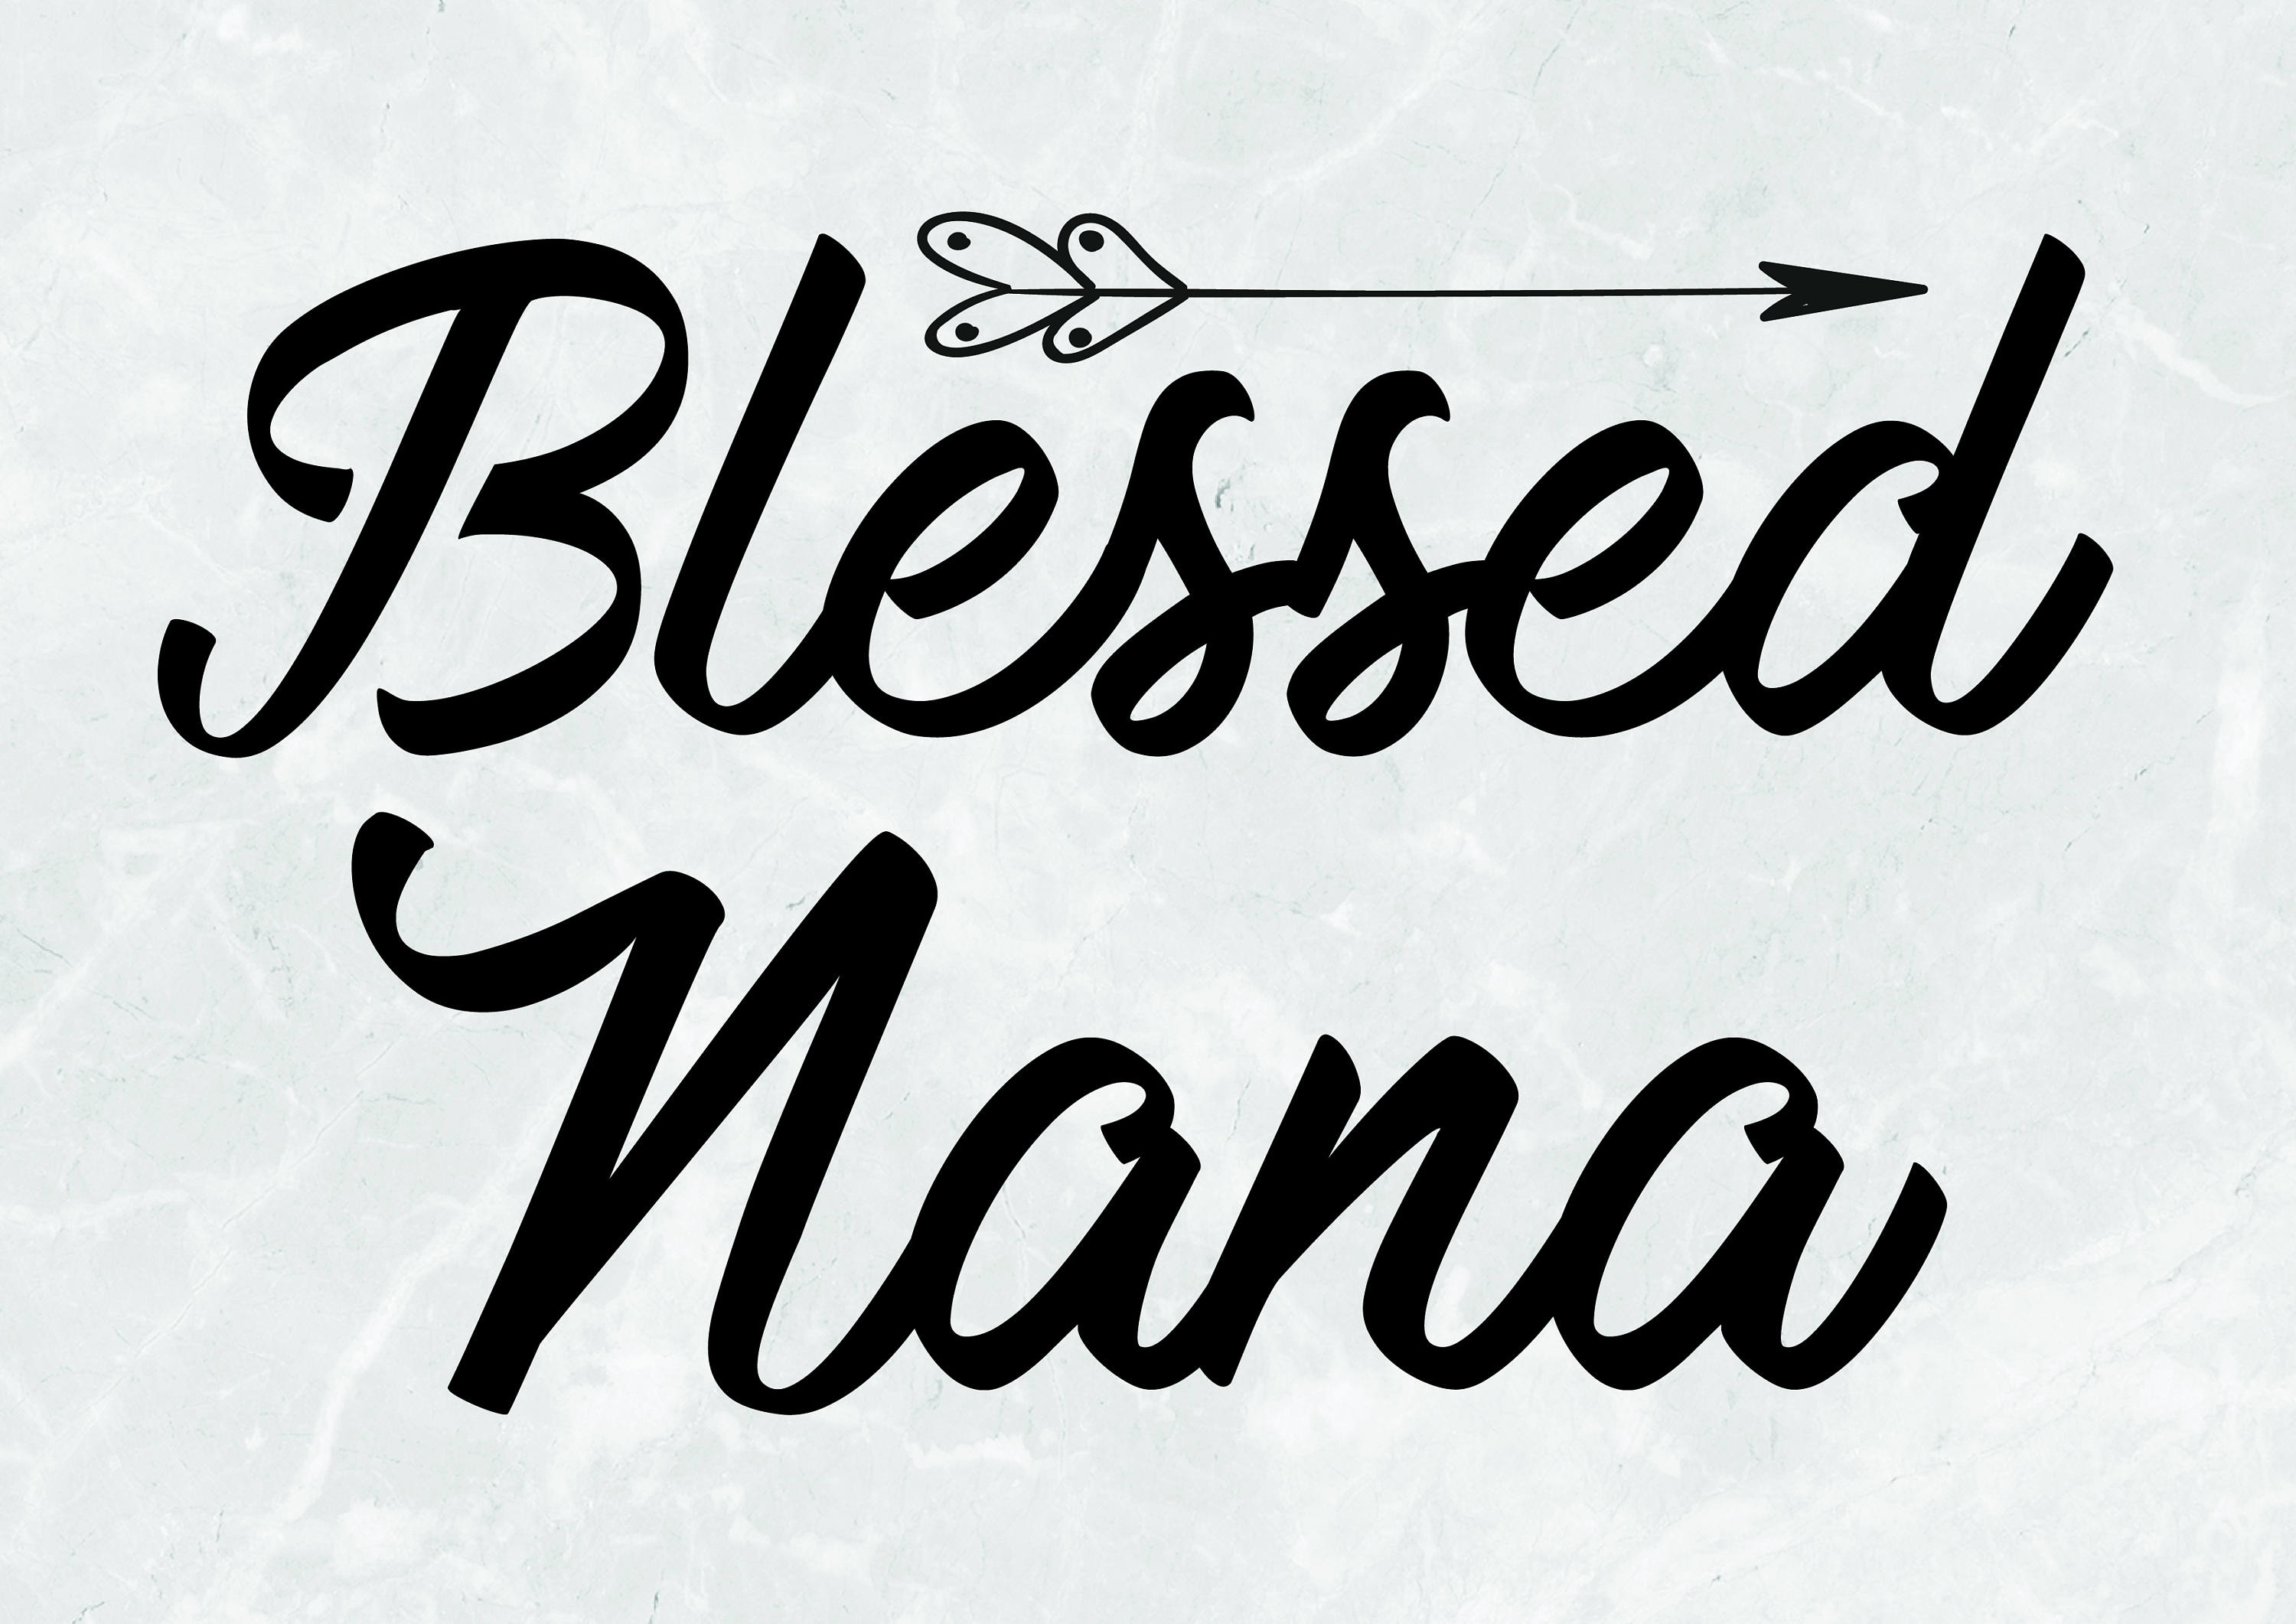 Download Blessed Nana print Cutting Files svg png eps dxg jpg